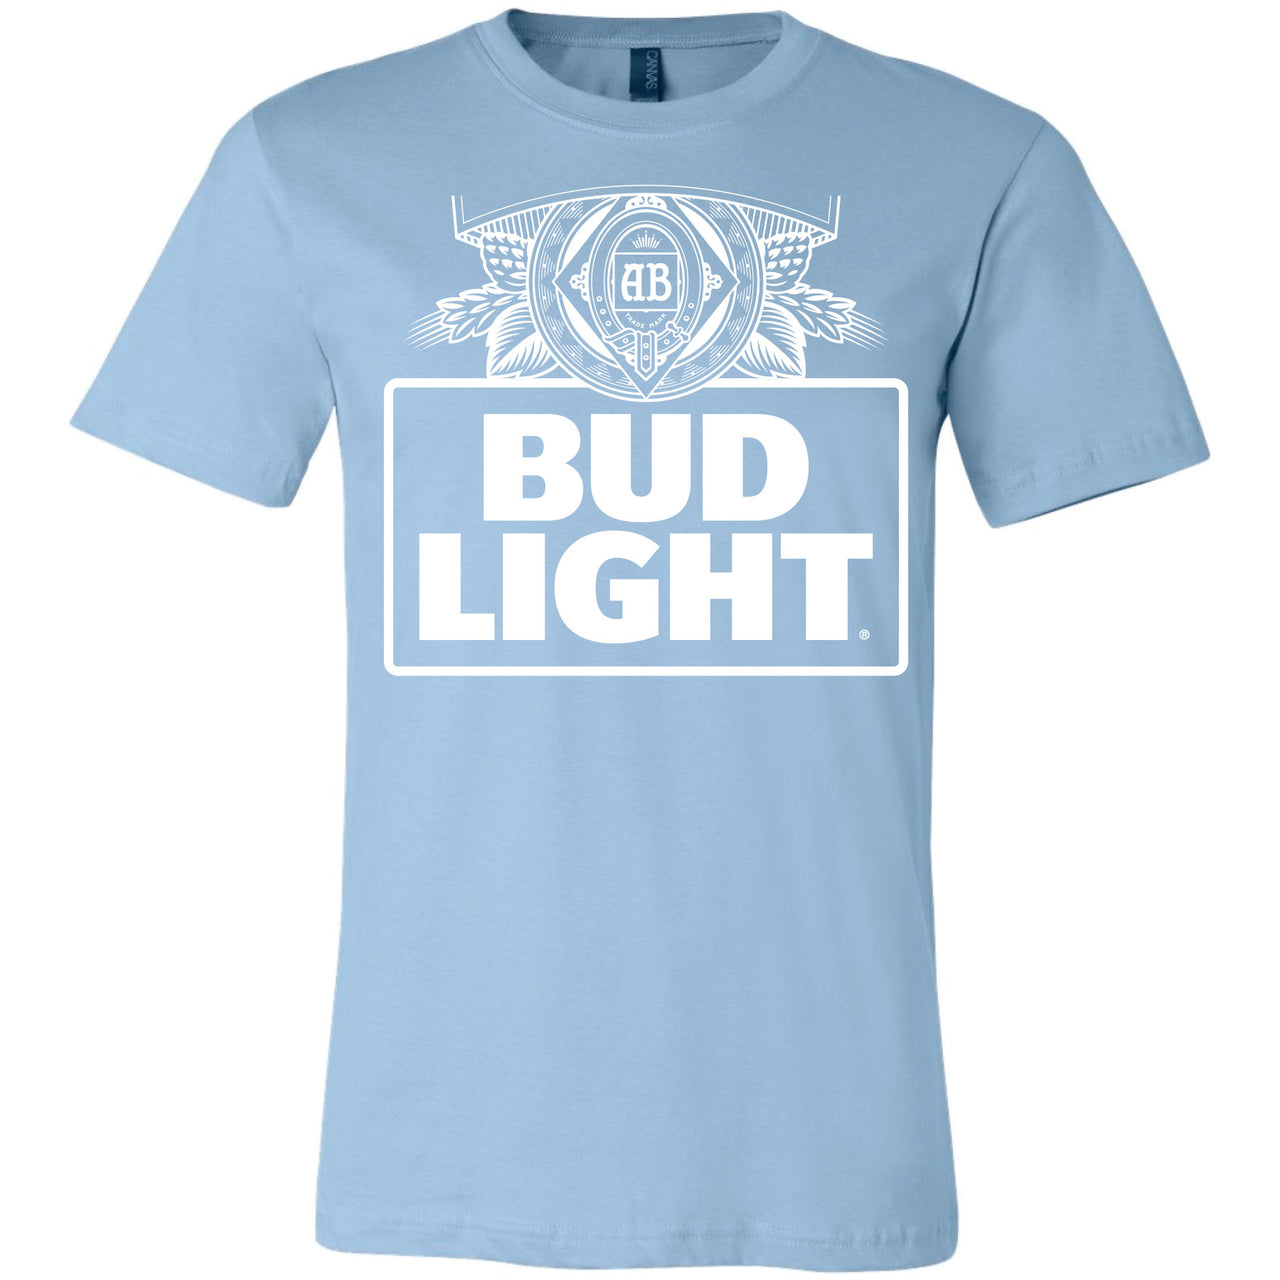 Bud Light - Bud Light Label Shirt